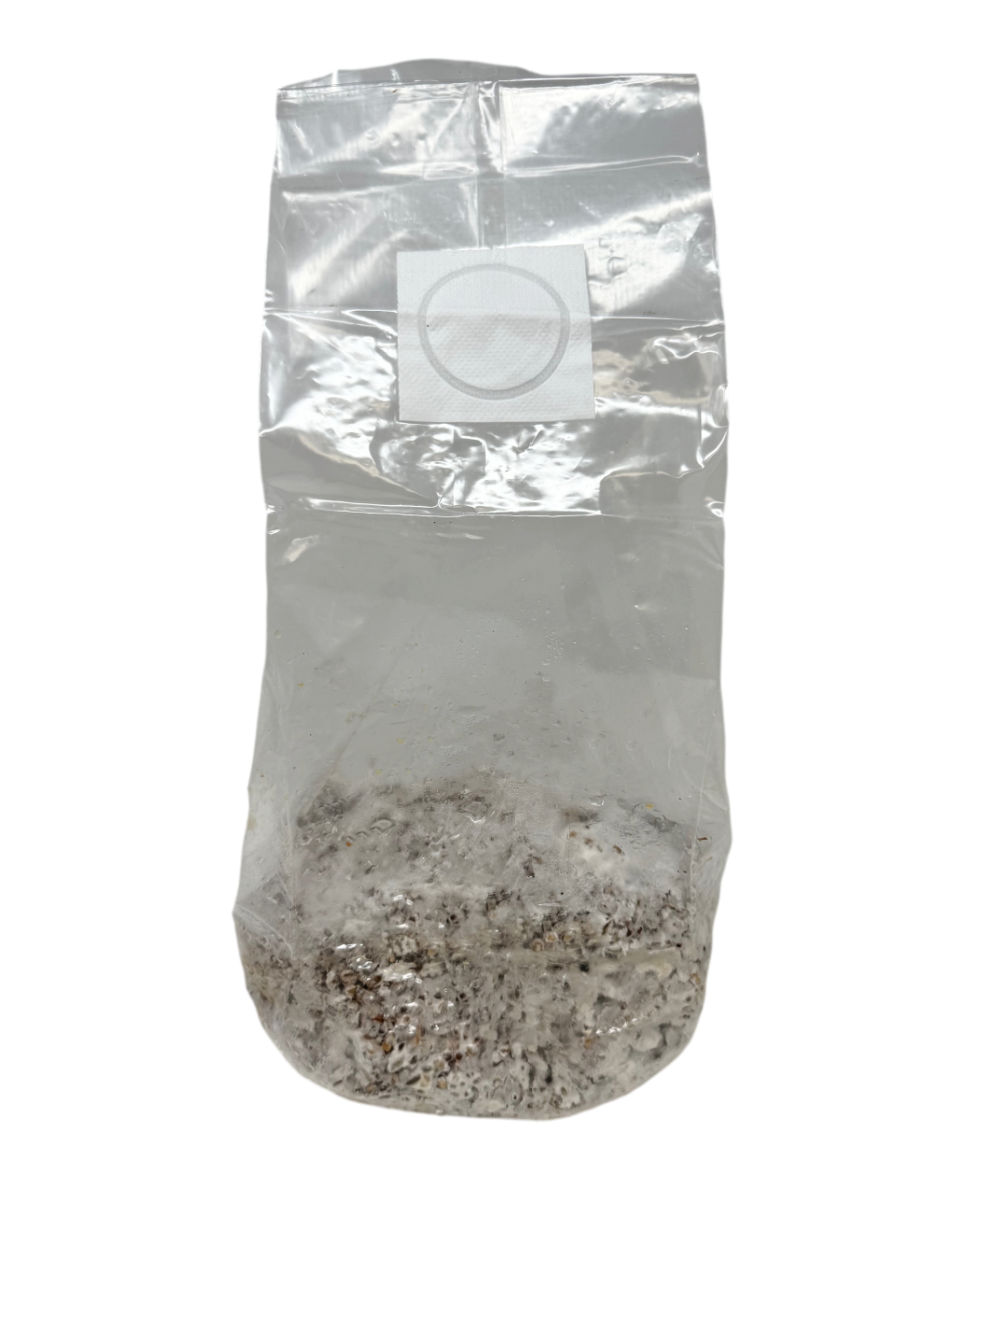 Amazon.com : BIHYM Mushroom Grow Spawn Bags, 8 Mil Mushroom Substrate  Growing Bags with 0.2 Micron Filter, 7.9